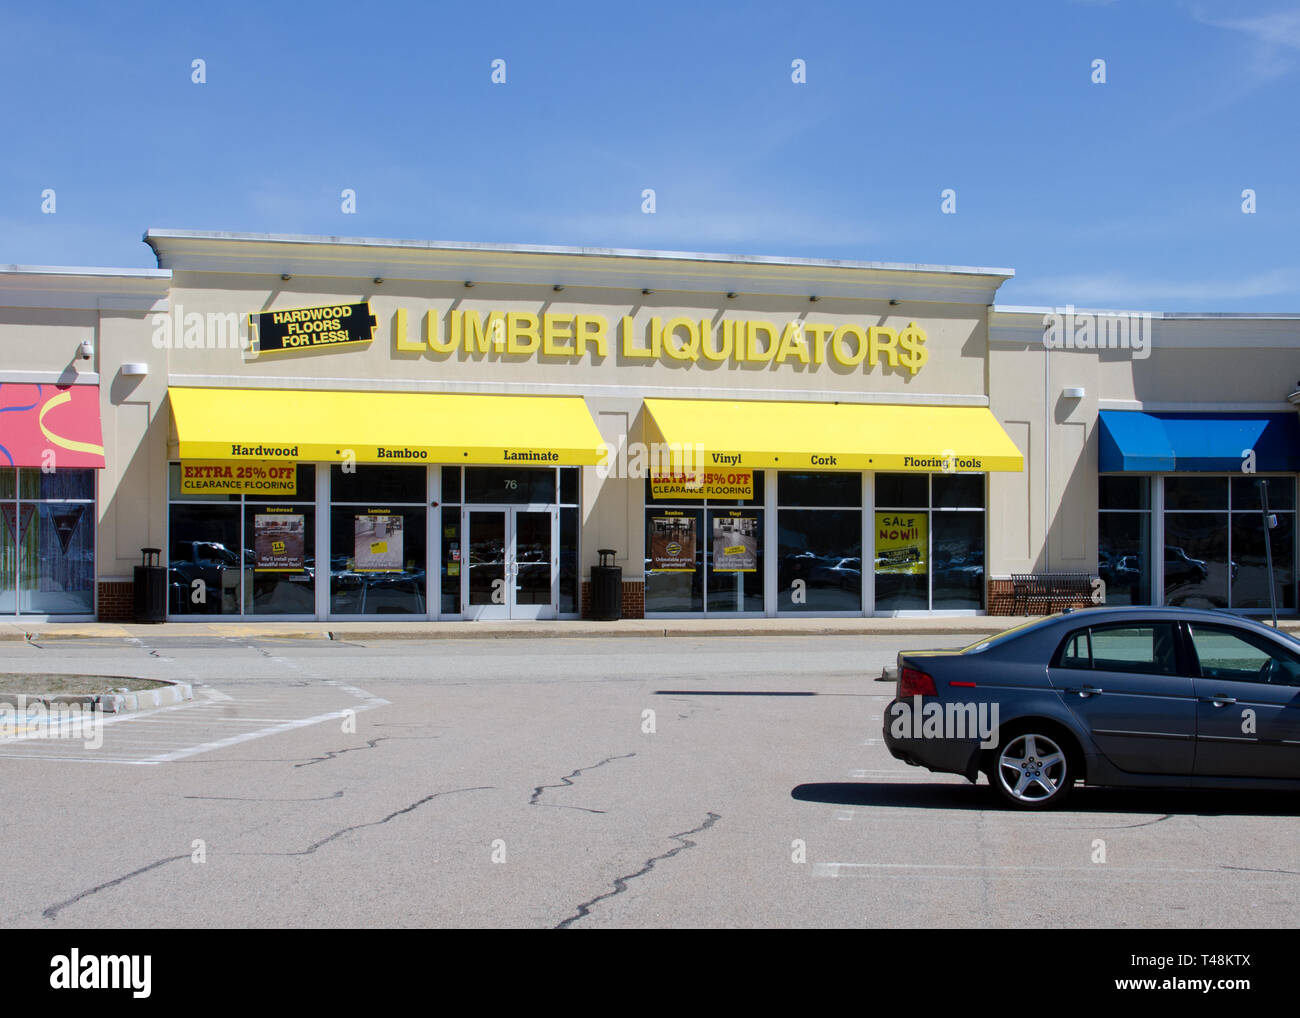 Lumber Liquidators exterior a chain of hardwood flooring stores Stock Photo